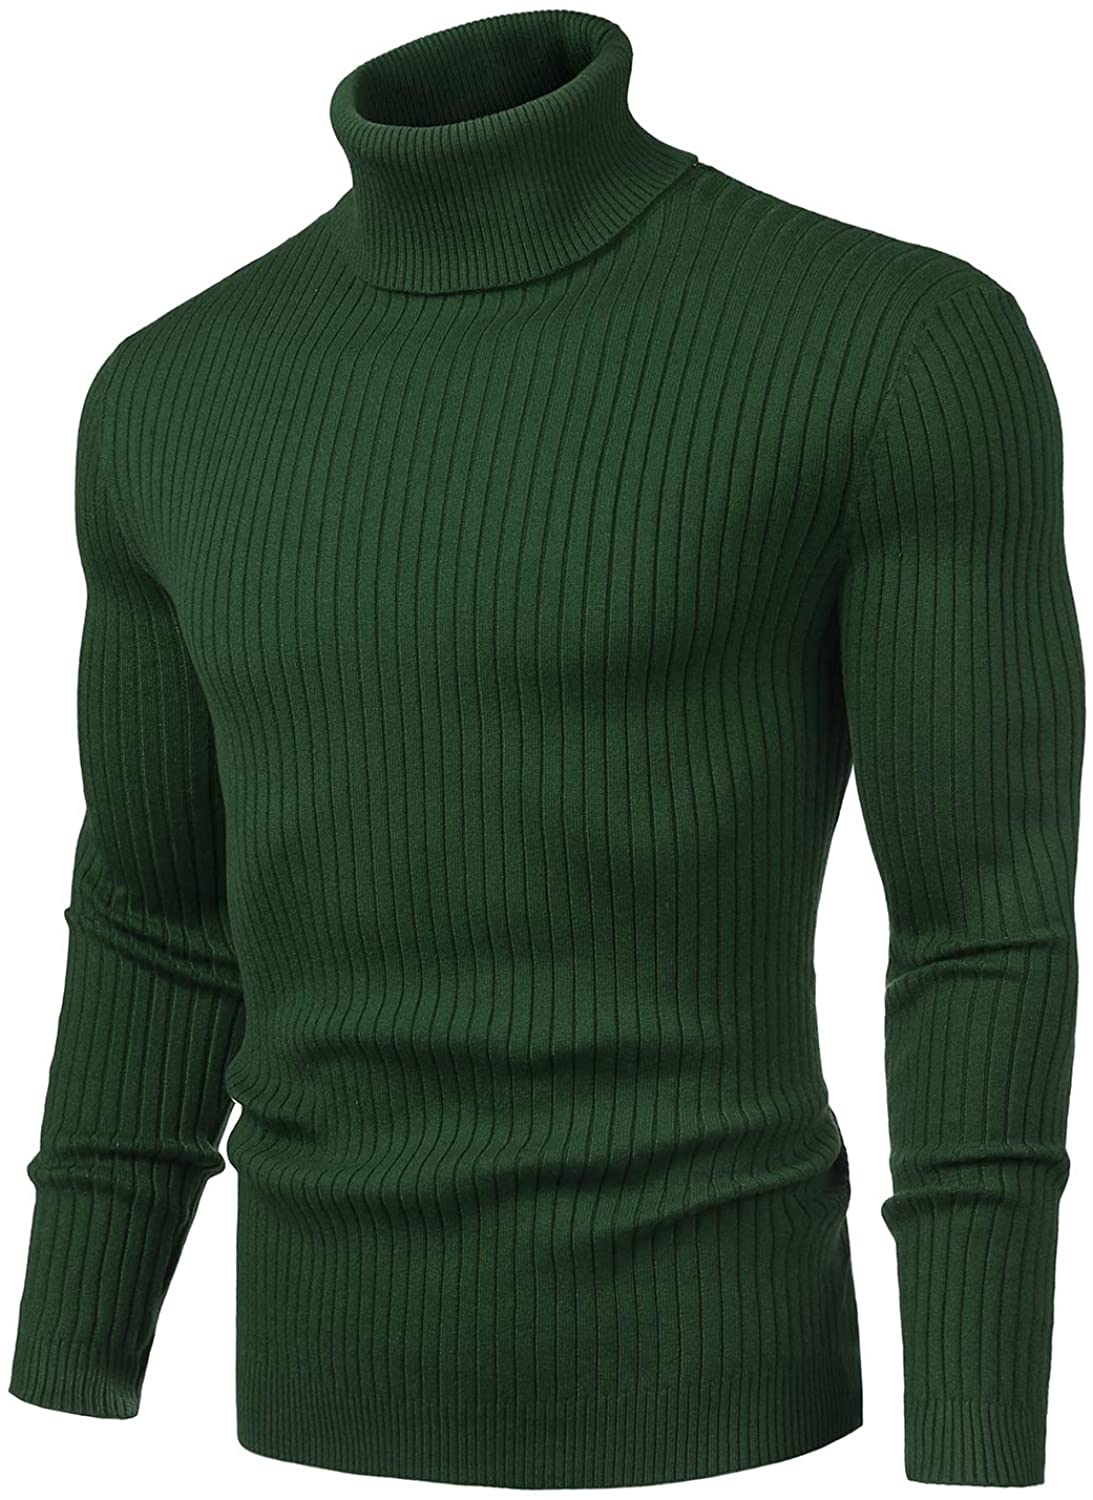 Jmwss QD Mens Waist Long Sleeve Thick Slim Fit Knitwear Turtleneck Sweater Tops 